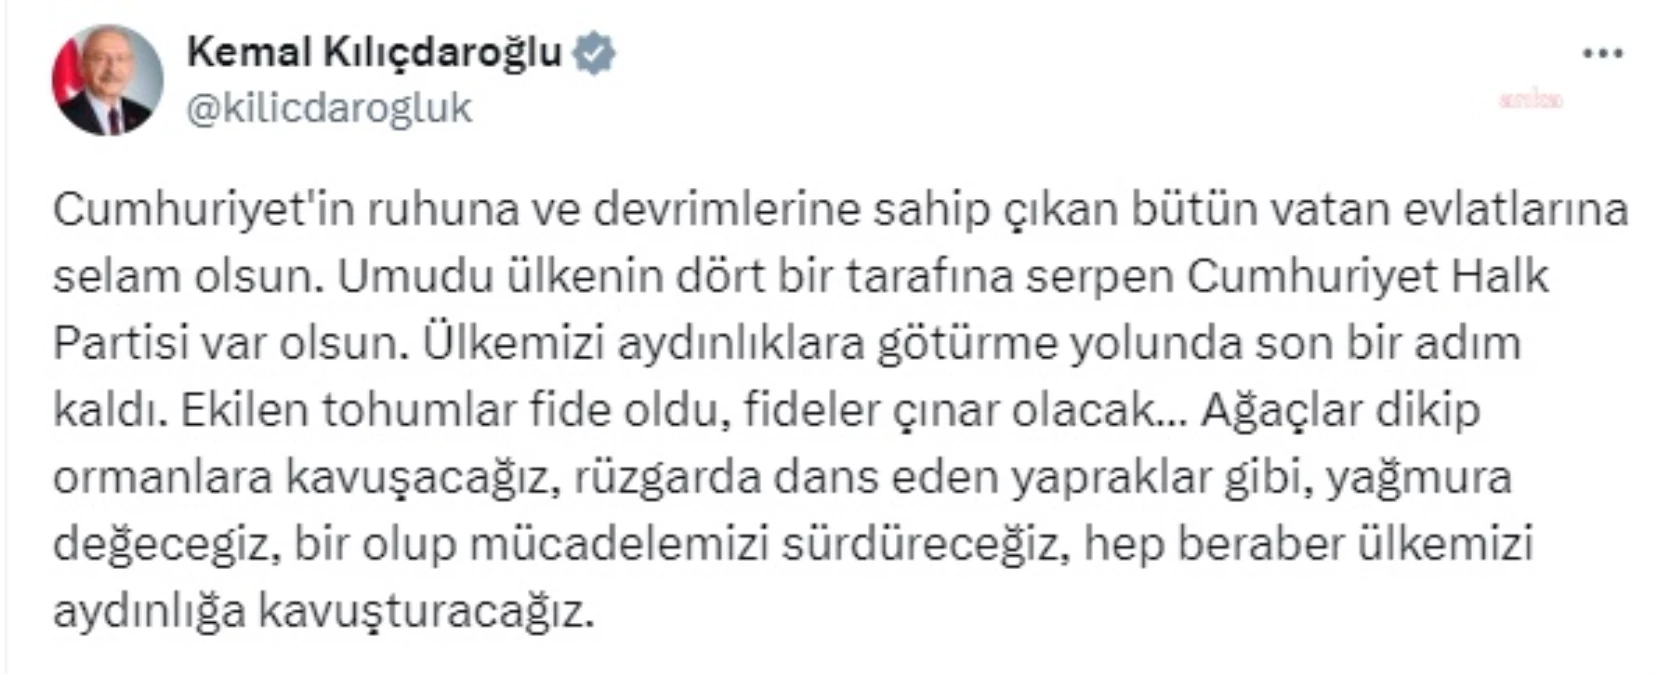 Kılıçdaroğlu: Cumhuriyet Halk Partisi umudu serpiyor